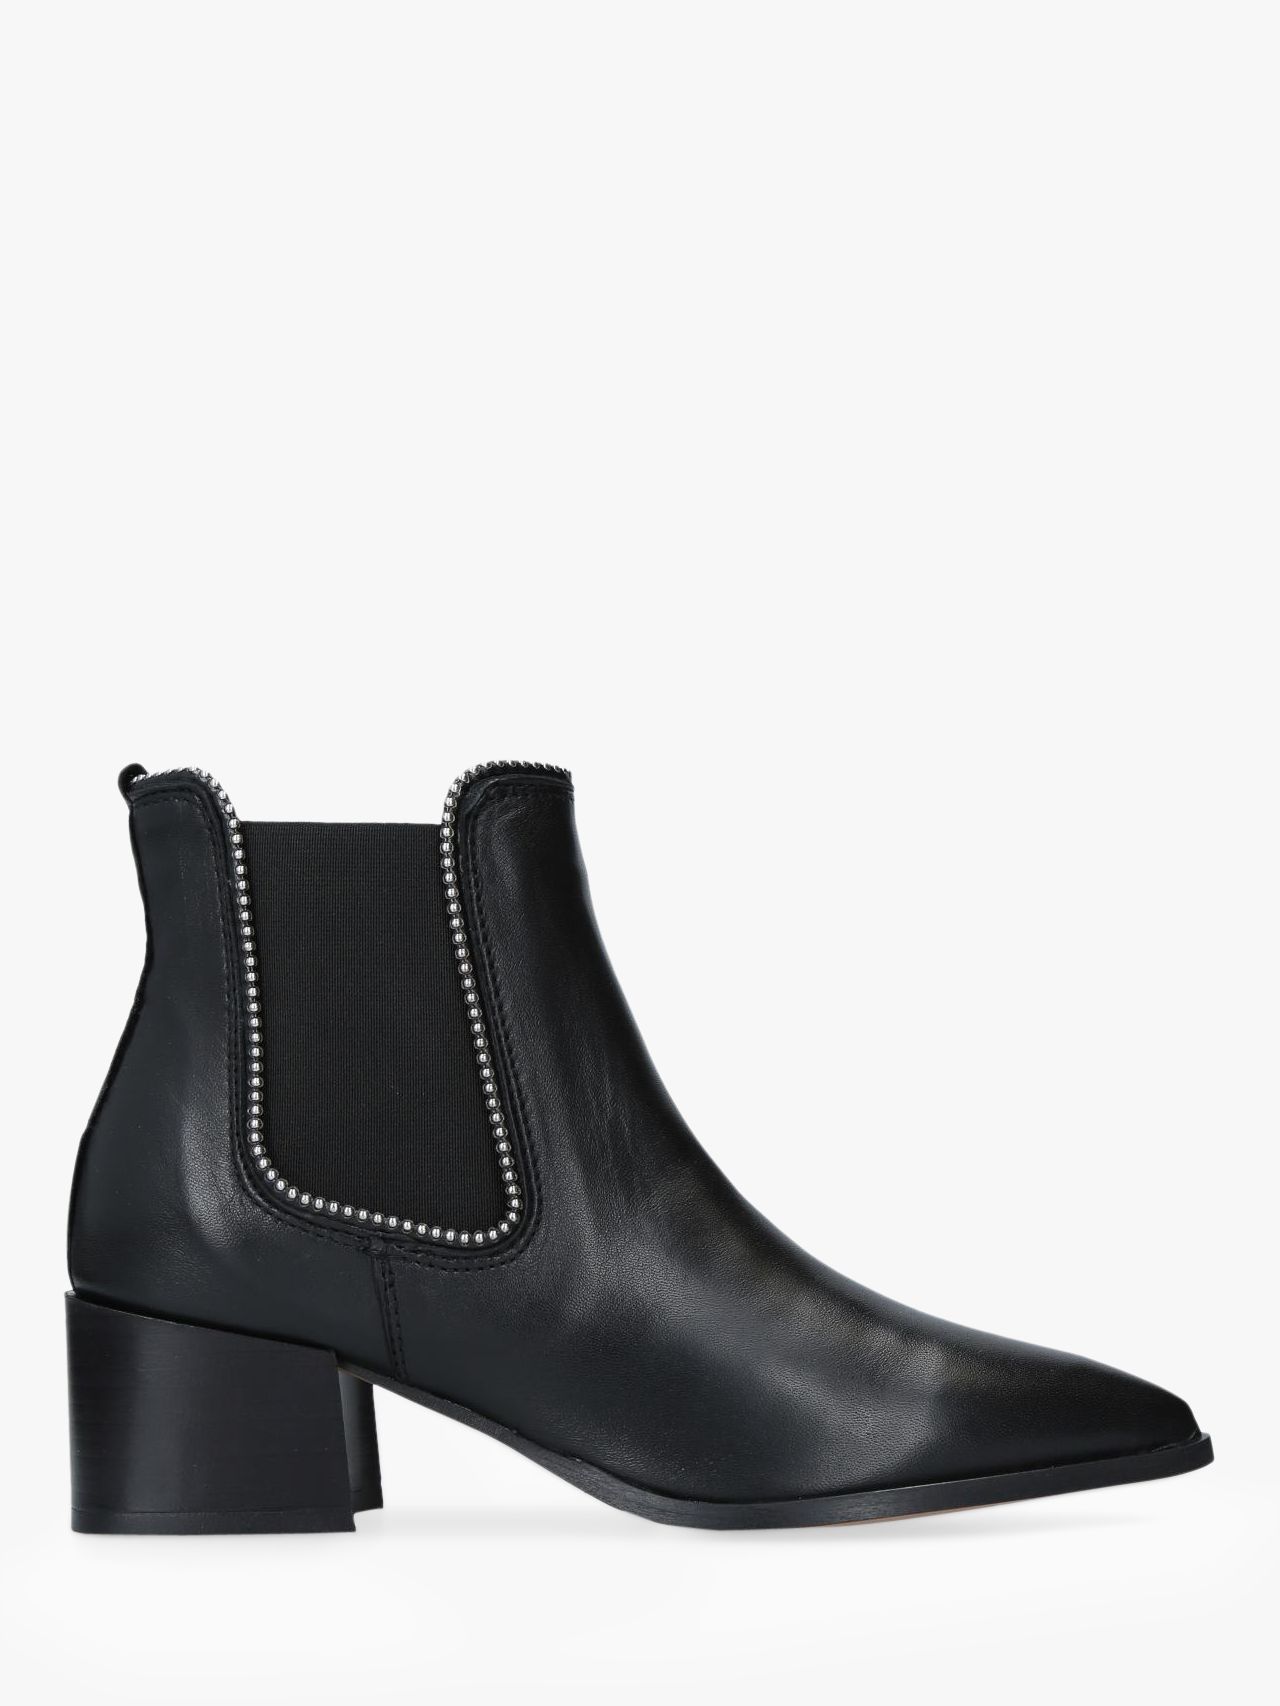 Carvela Spire Block Heel Studded Leather Ankle Boots, Black